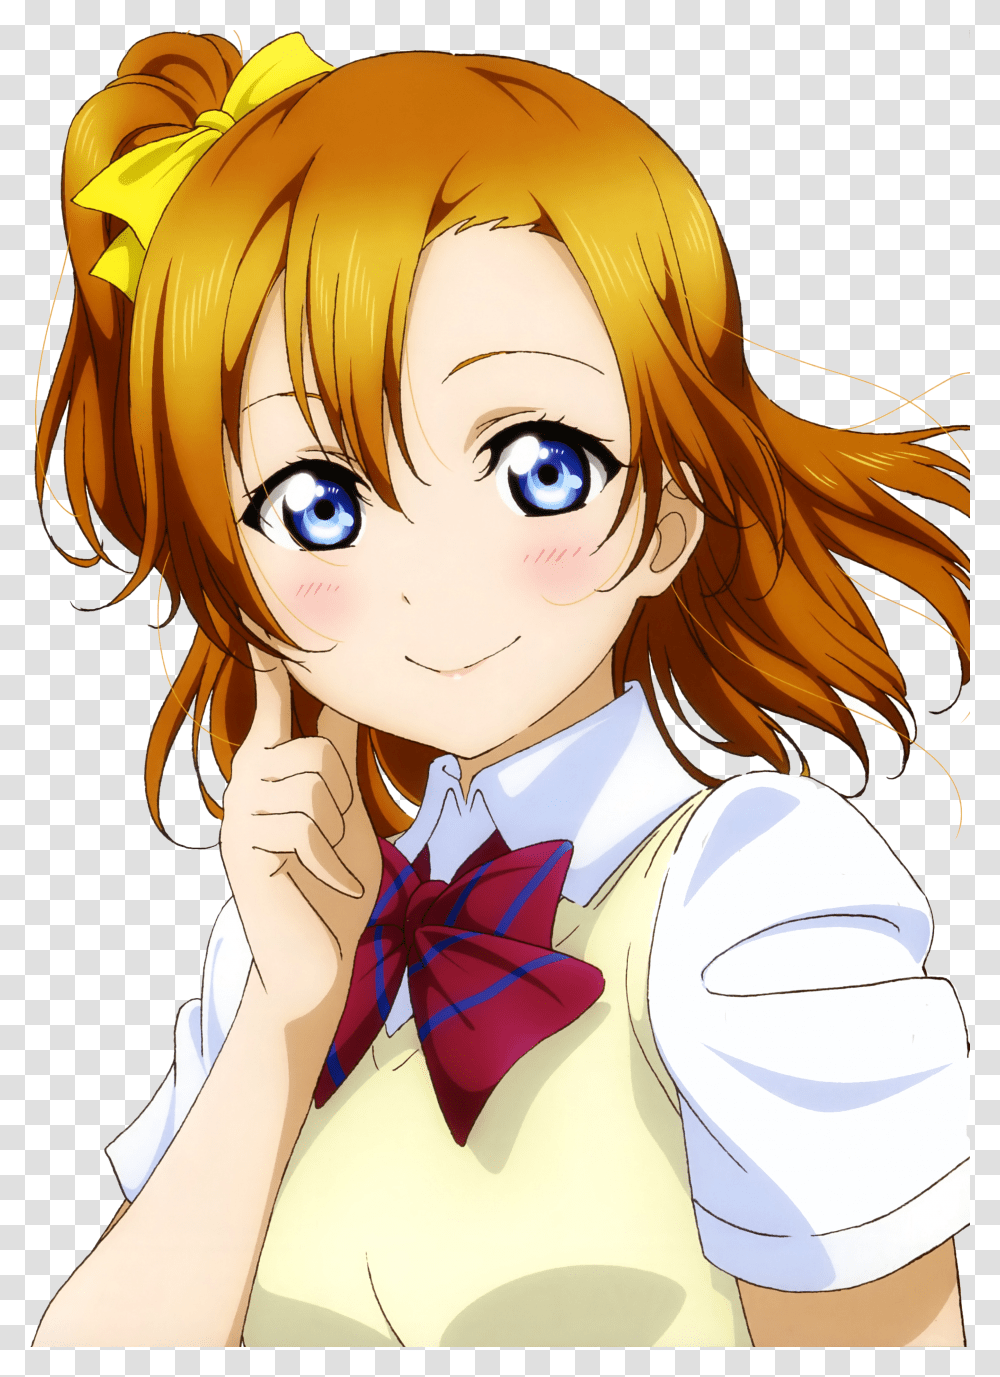 Short Orange Haired Anime Girl Transparent Png